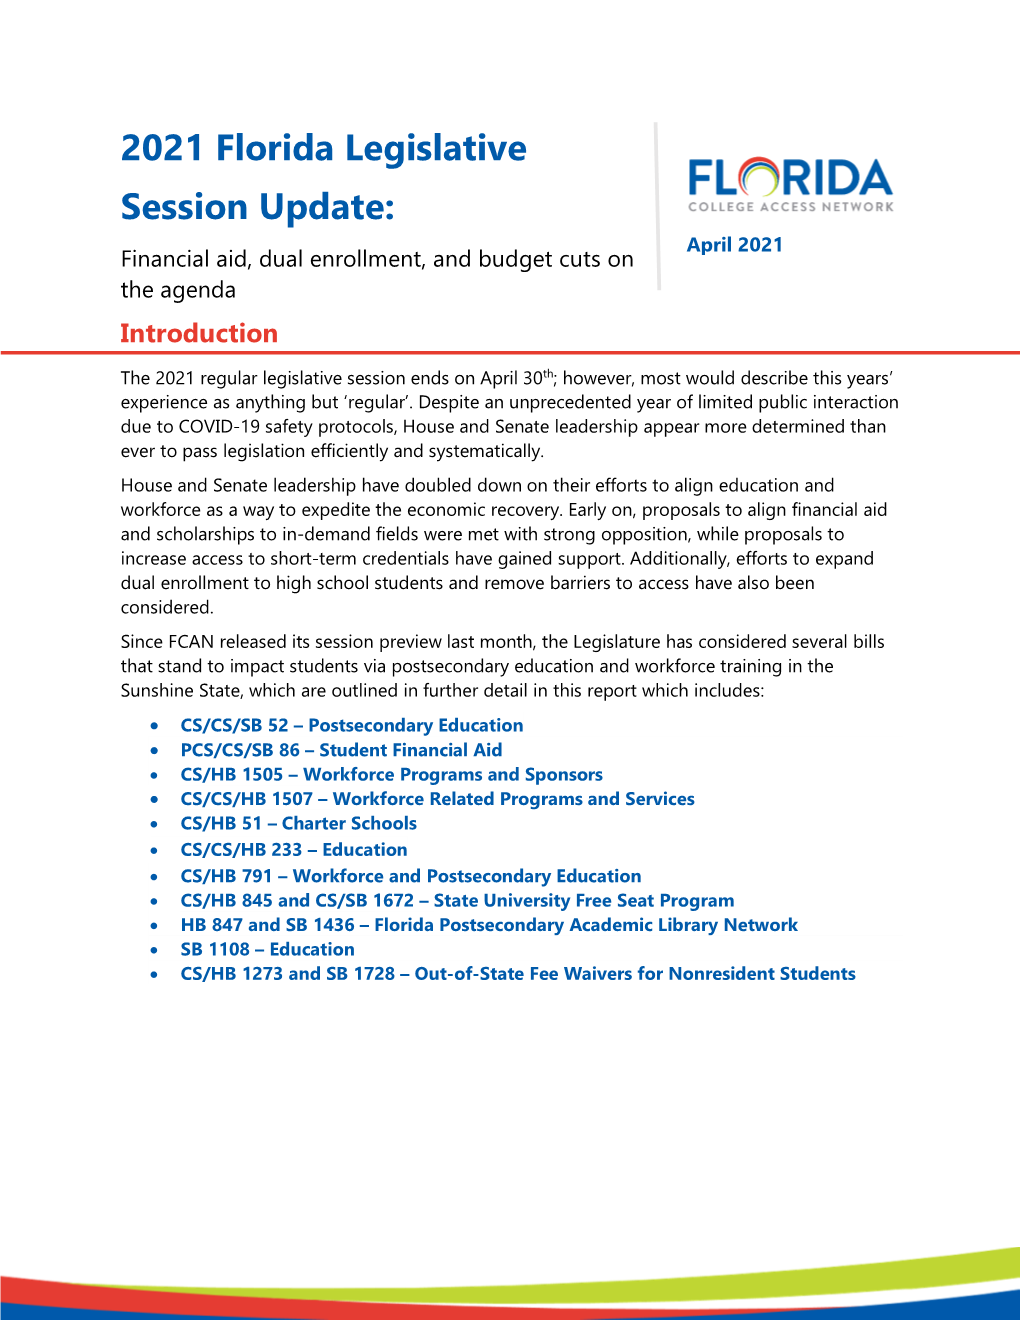 2021 Florida Legislative Session Update: April 2021 Financial Aid, Dual Enrollment, and Budget Cuts on the Agenda